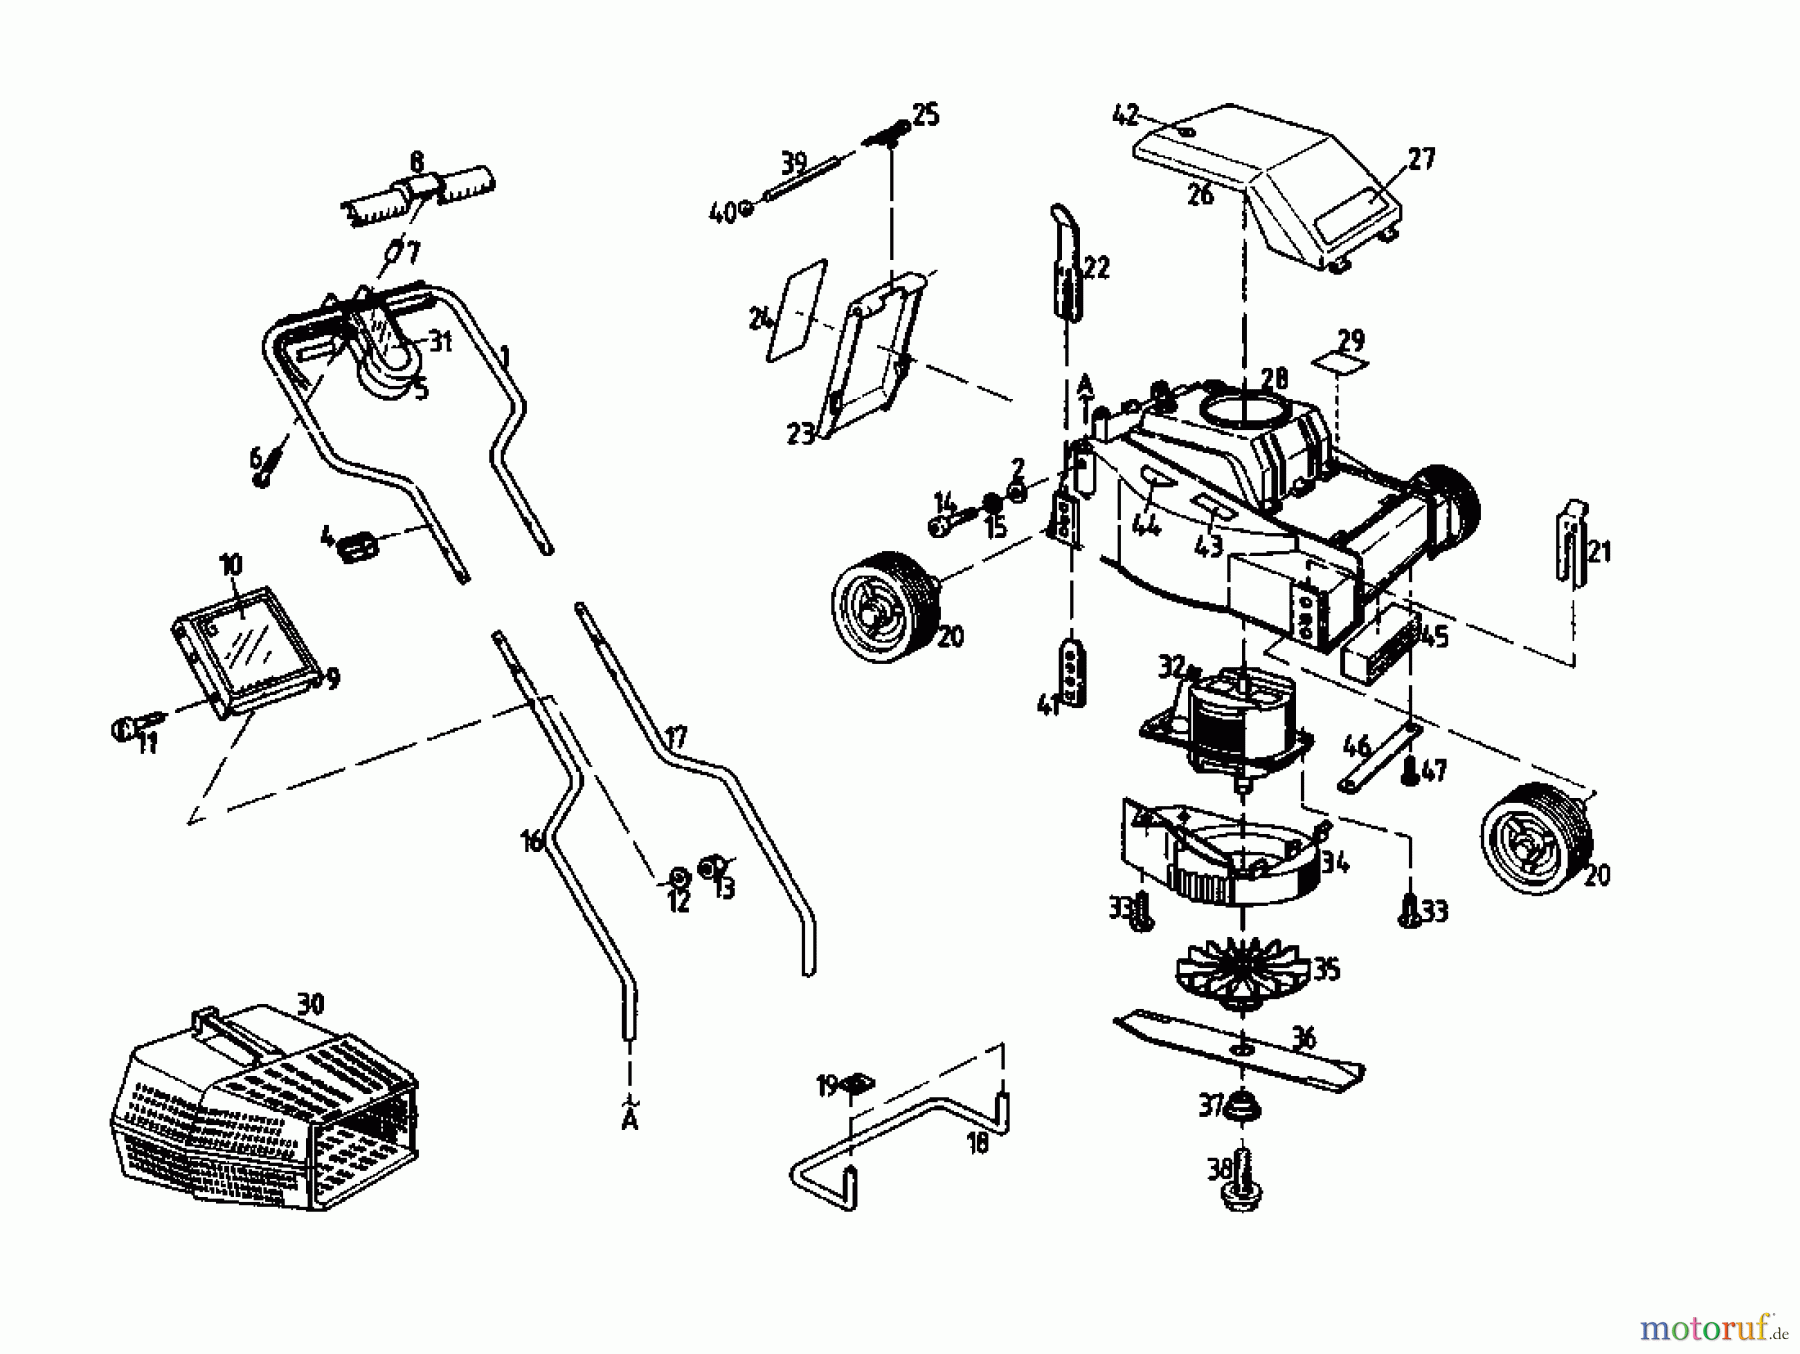  Gutbrod Electric mower HE 32 02845.01  (1988) Basic machine